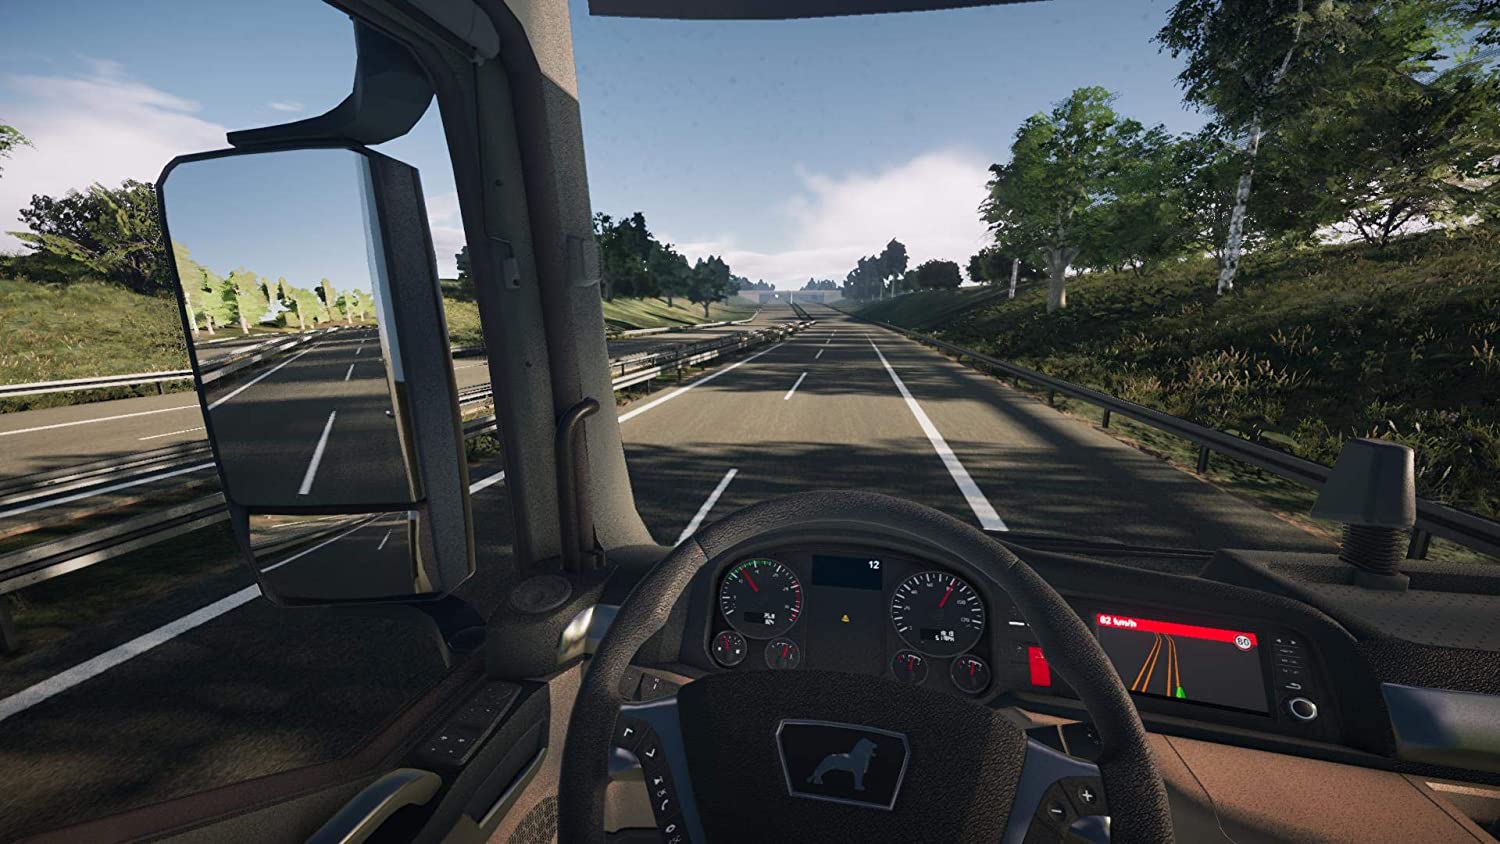 Что такое симулятор в игре. On the Road – Truck Simulation игра. Truck Simulator ps4. On the Road Truck Simulator для PLAYSTATION 4. Евро трак симулятор на ПС 4.